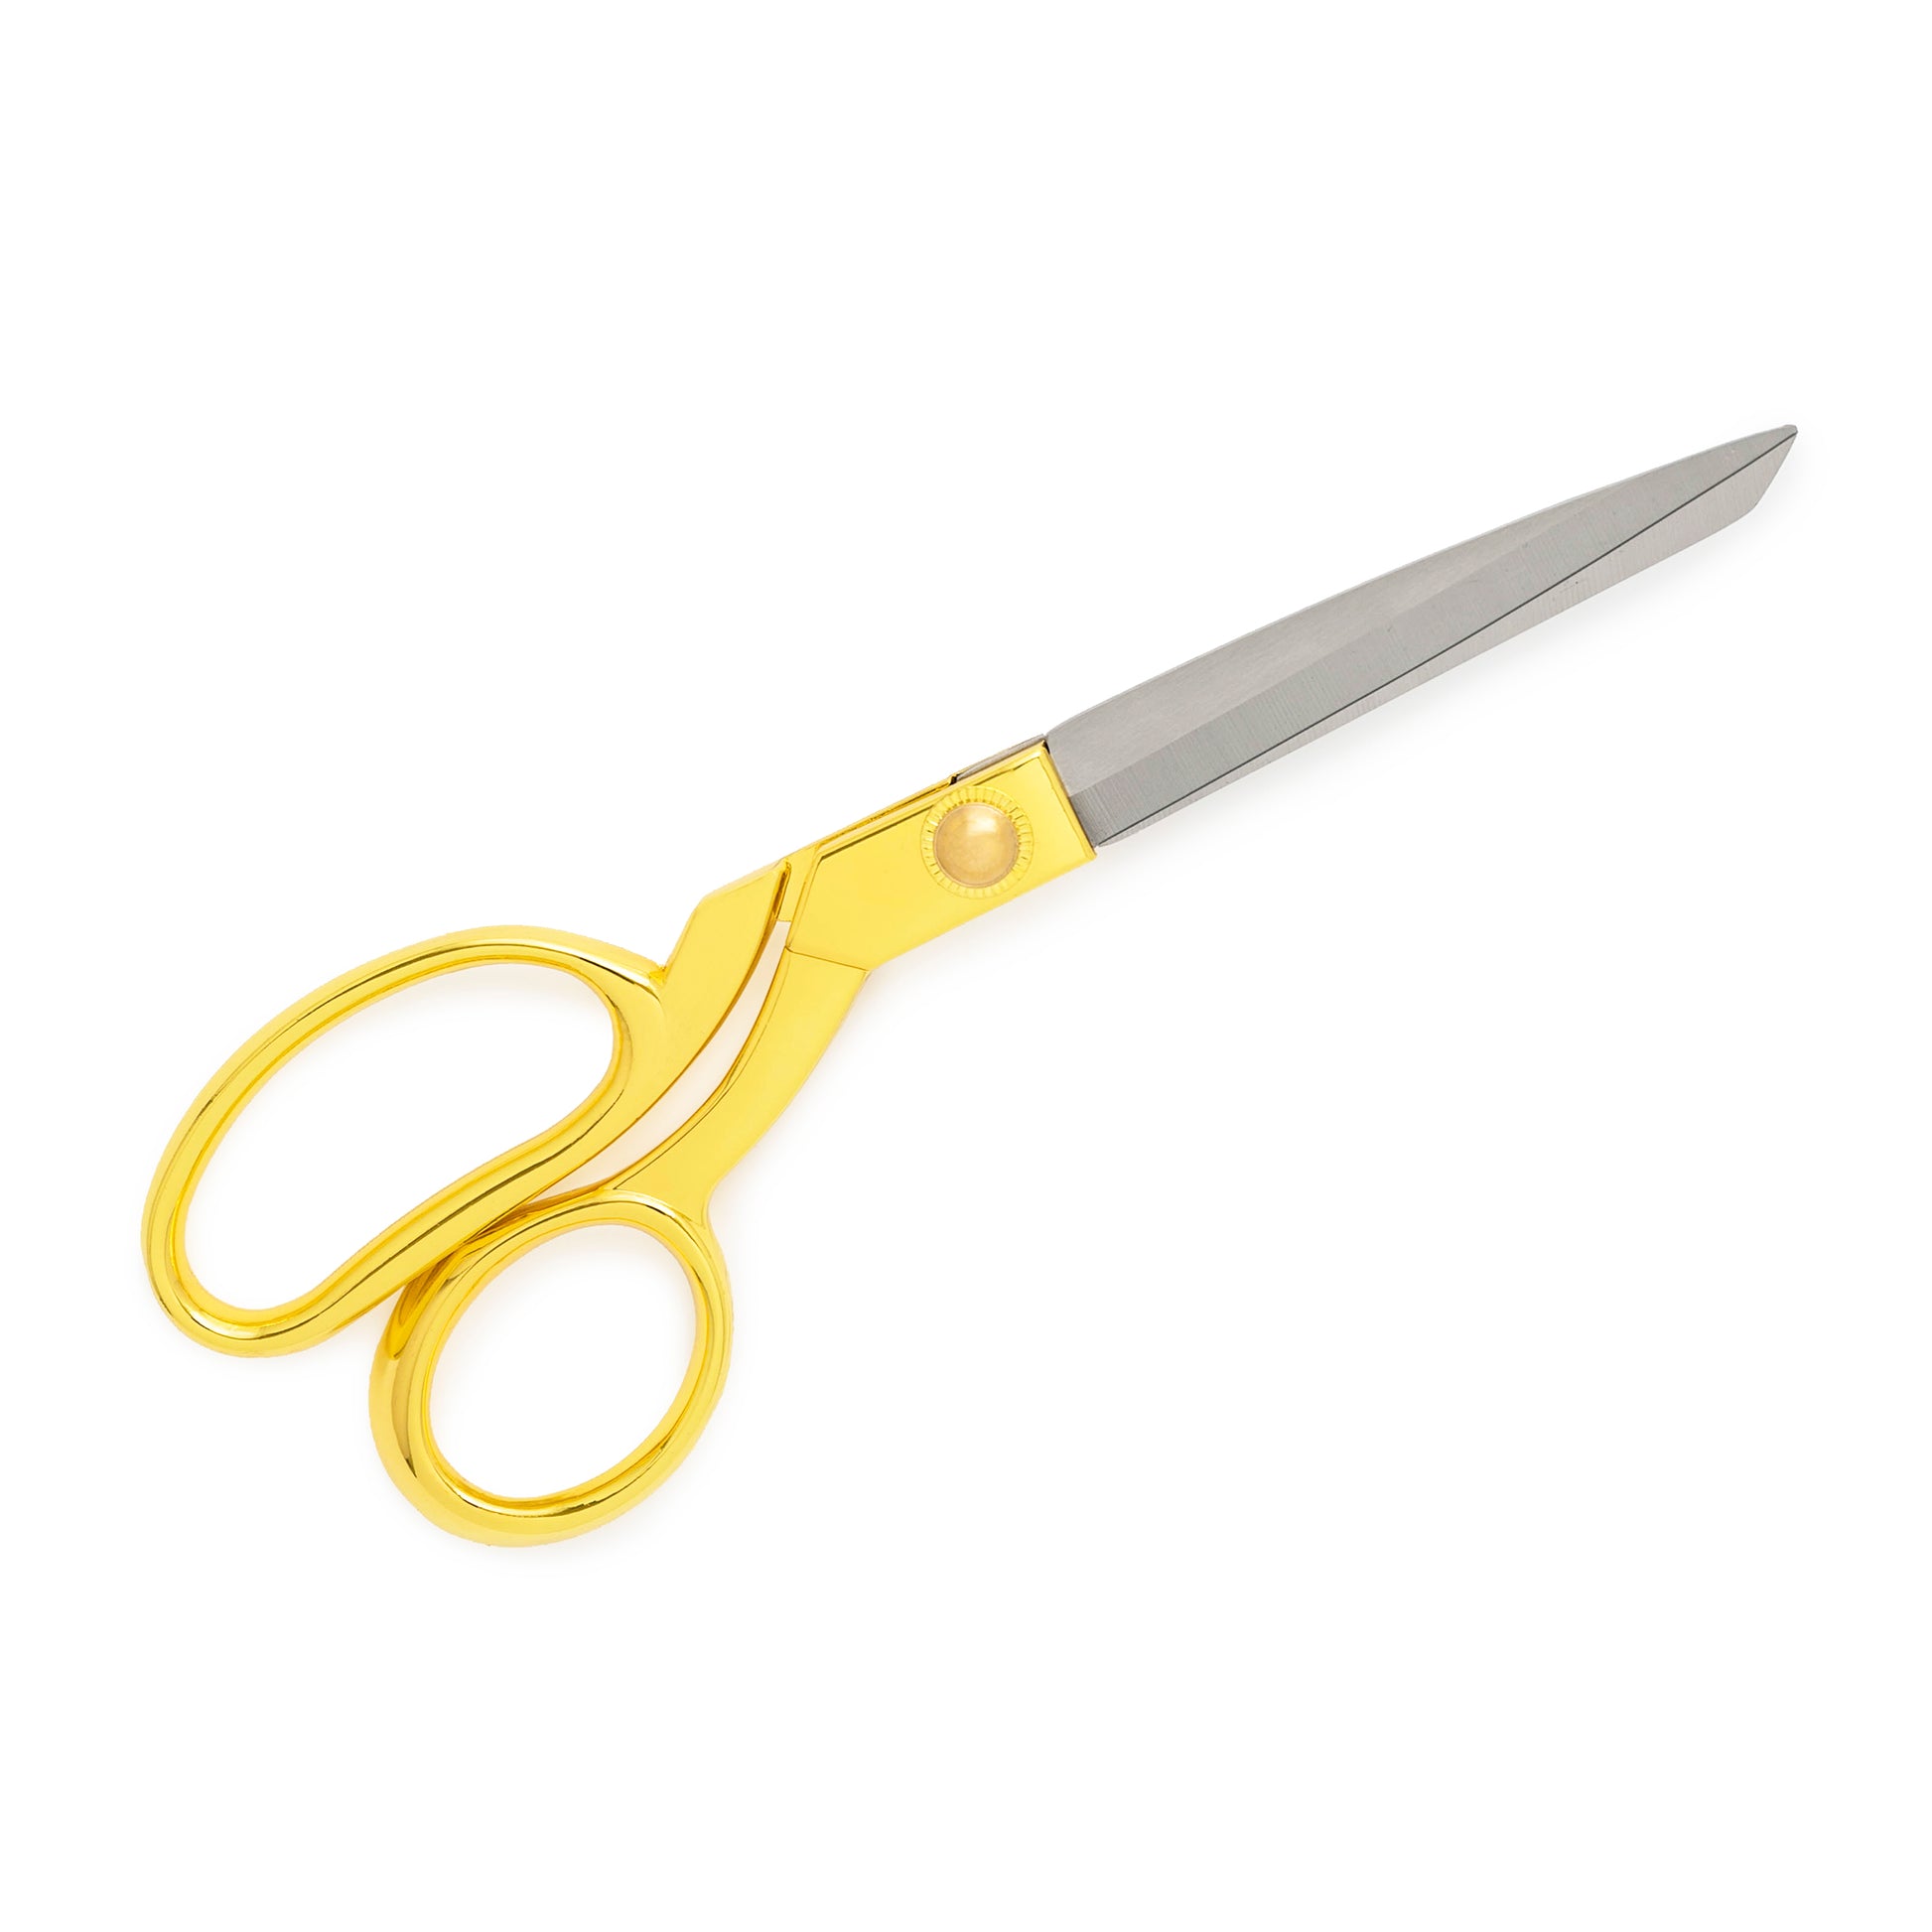 How do I tighten these tiny Scissors? : r/howto